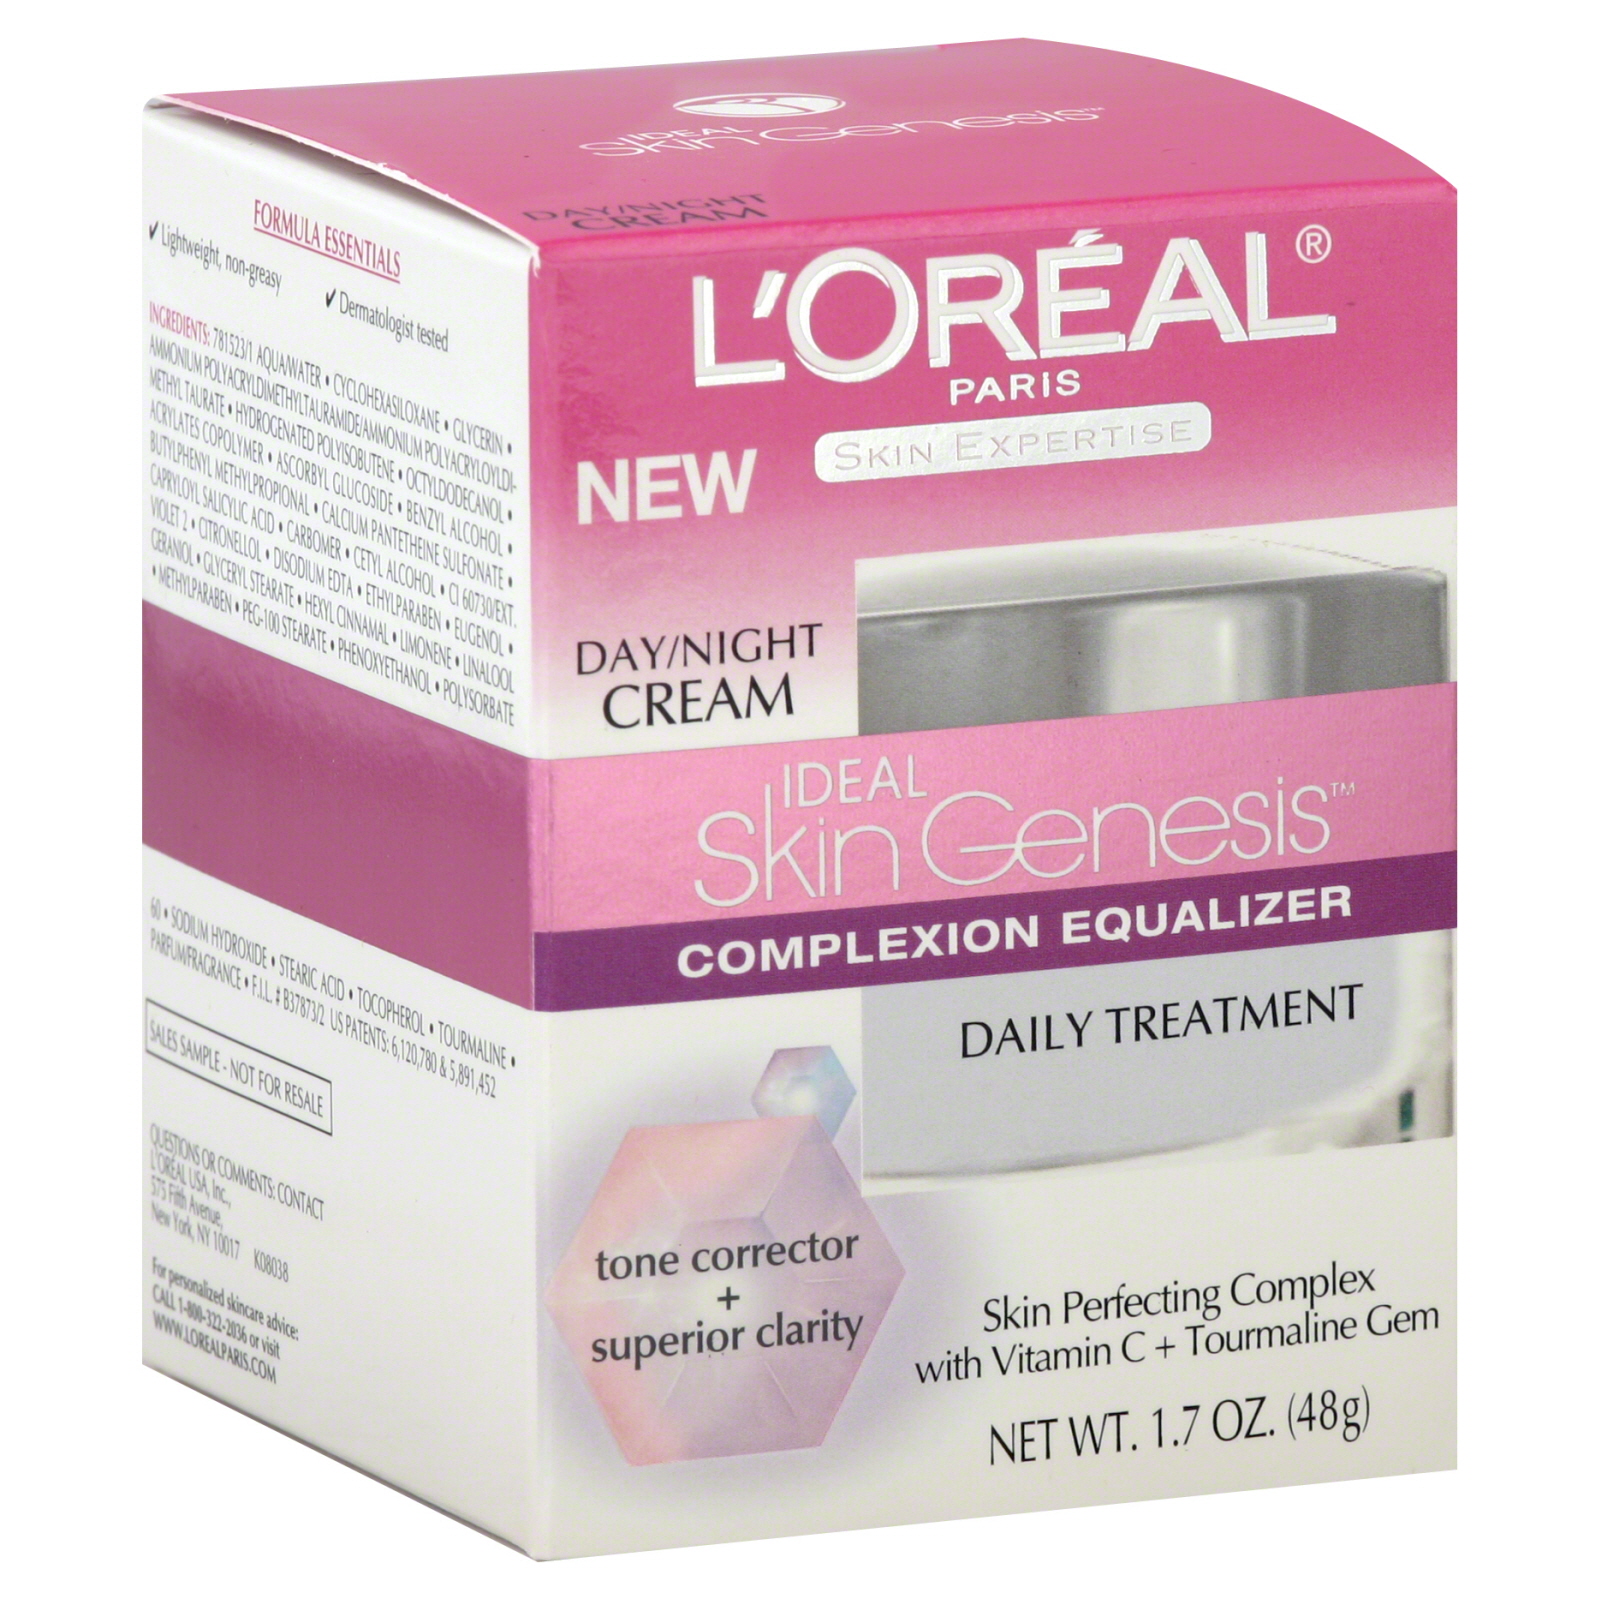 Ideal Skin Genesis Day/Night Cream, Complexion Equalizer, 1.7 oz (48 g)